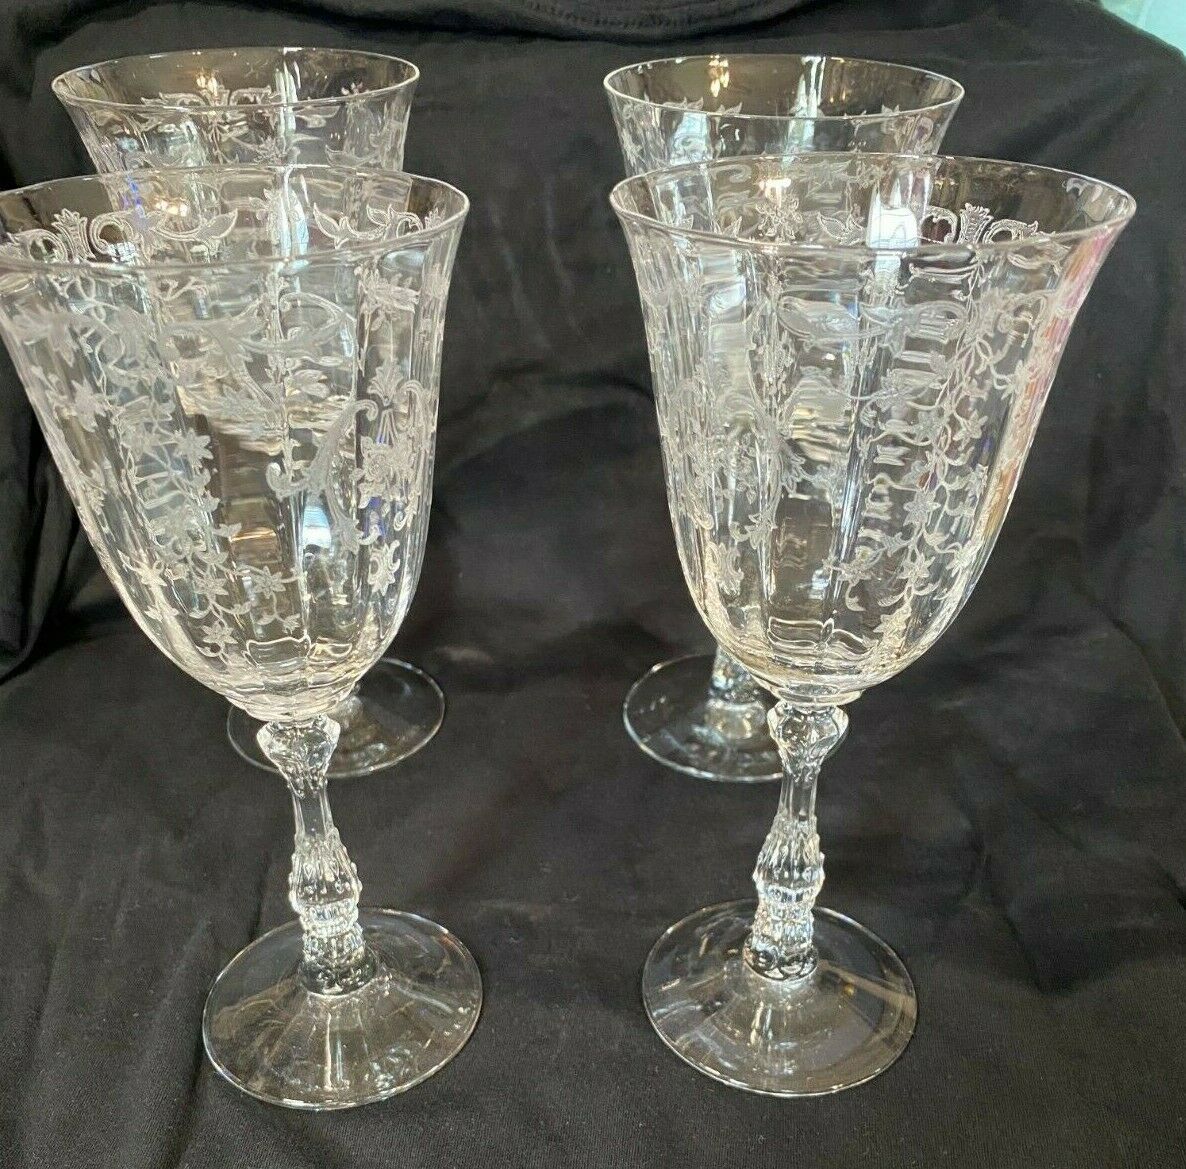 4 Fostoria Navarre Elegant Depression Era Water/wine Glasses Goblets 7-5/8" Tall